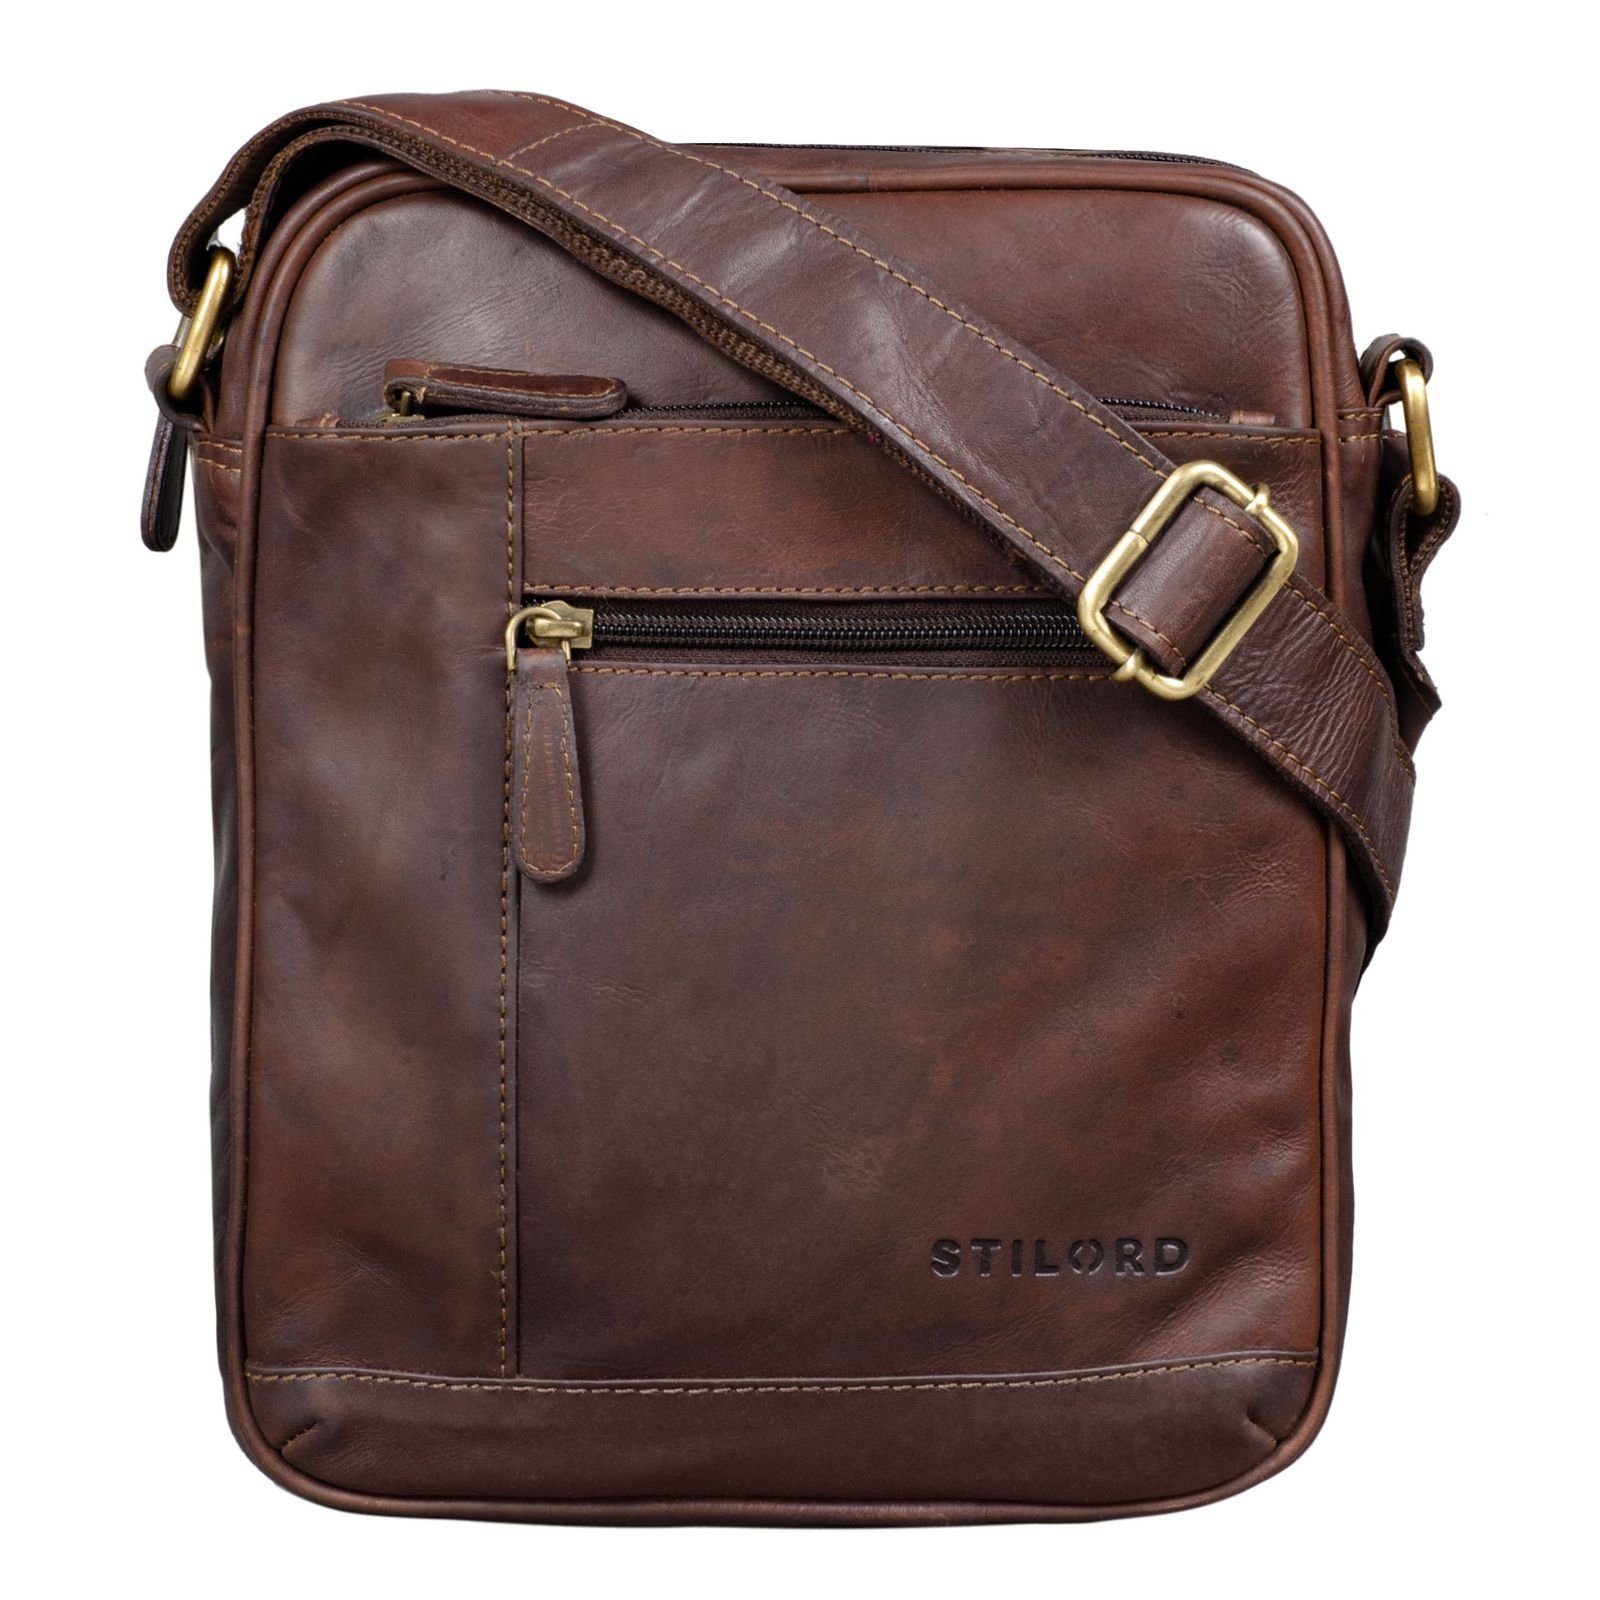 STILORD Messenger Bag "Diego" Vintage Herrentasche Leder klein cognac - dunkelbraun | Messenger Bags